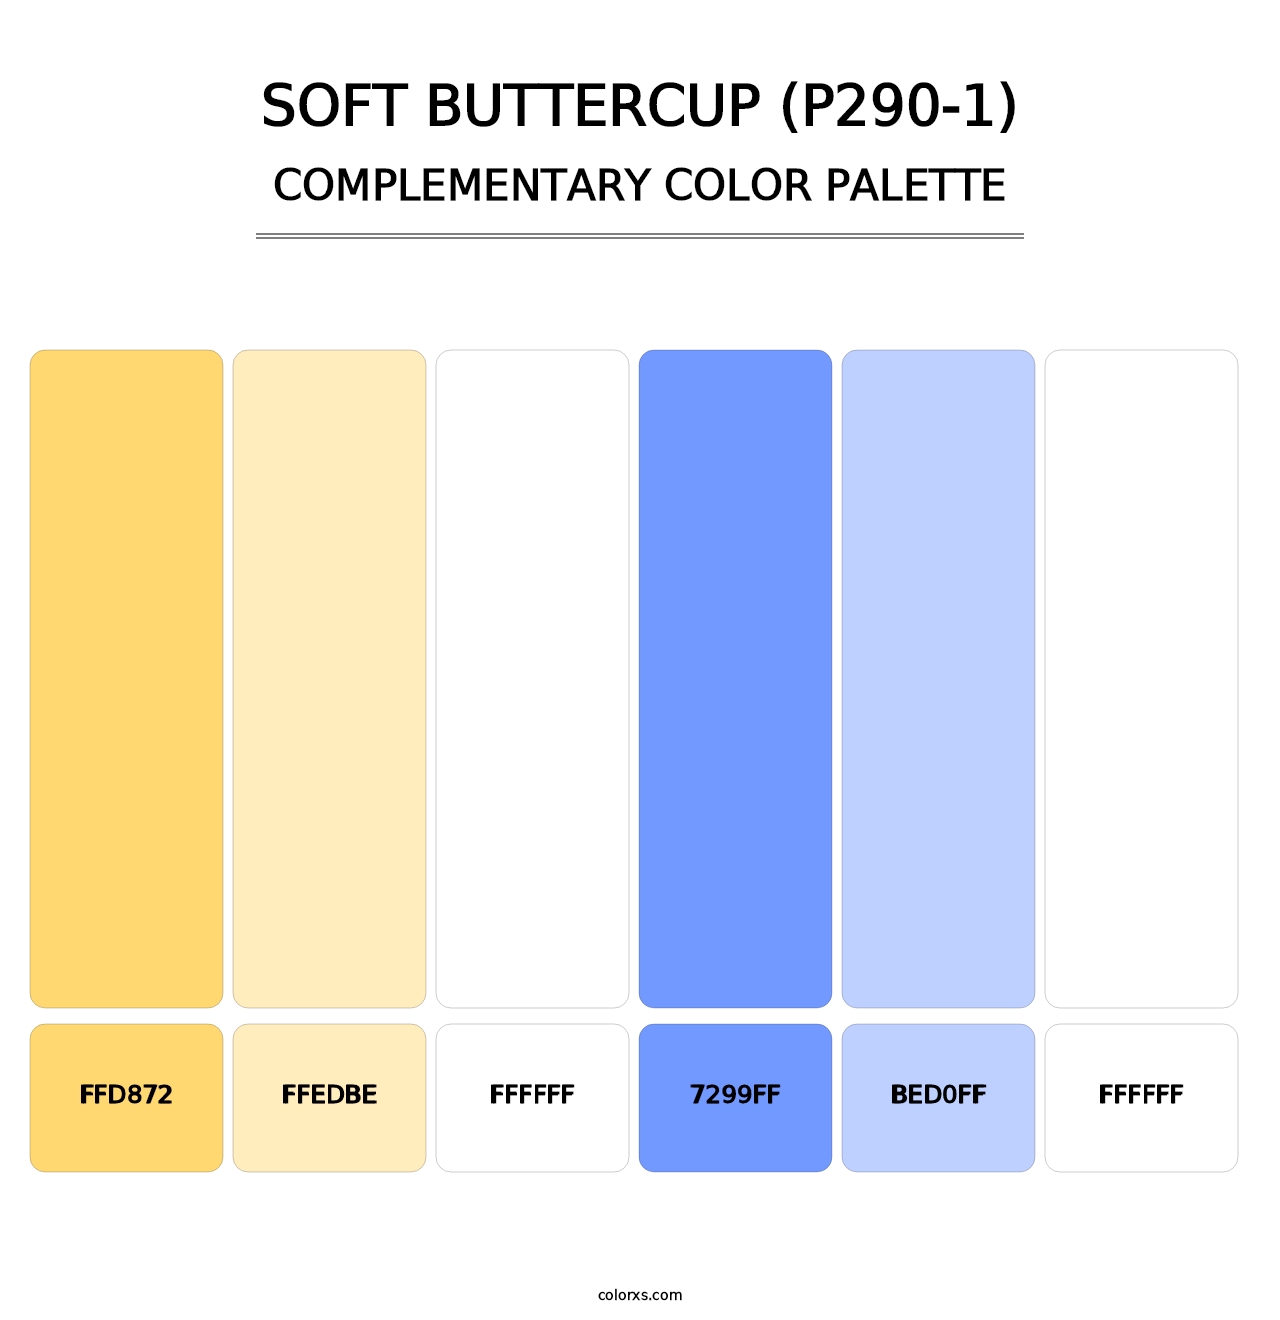 Soft Buttercup (P290-1) - Complementary Color Palette